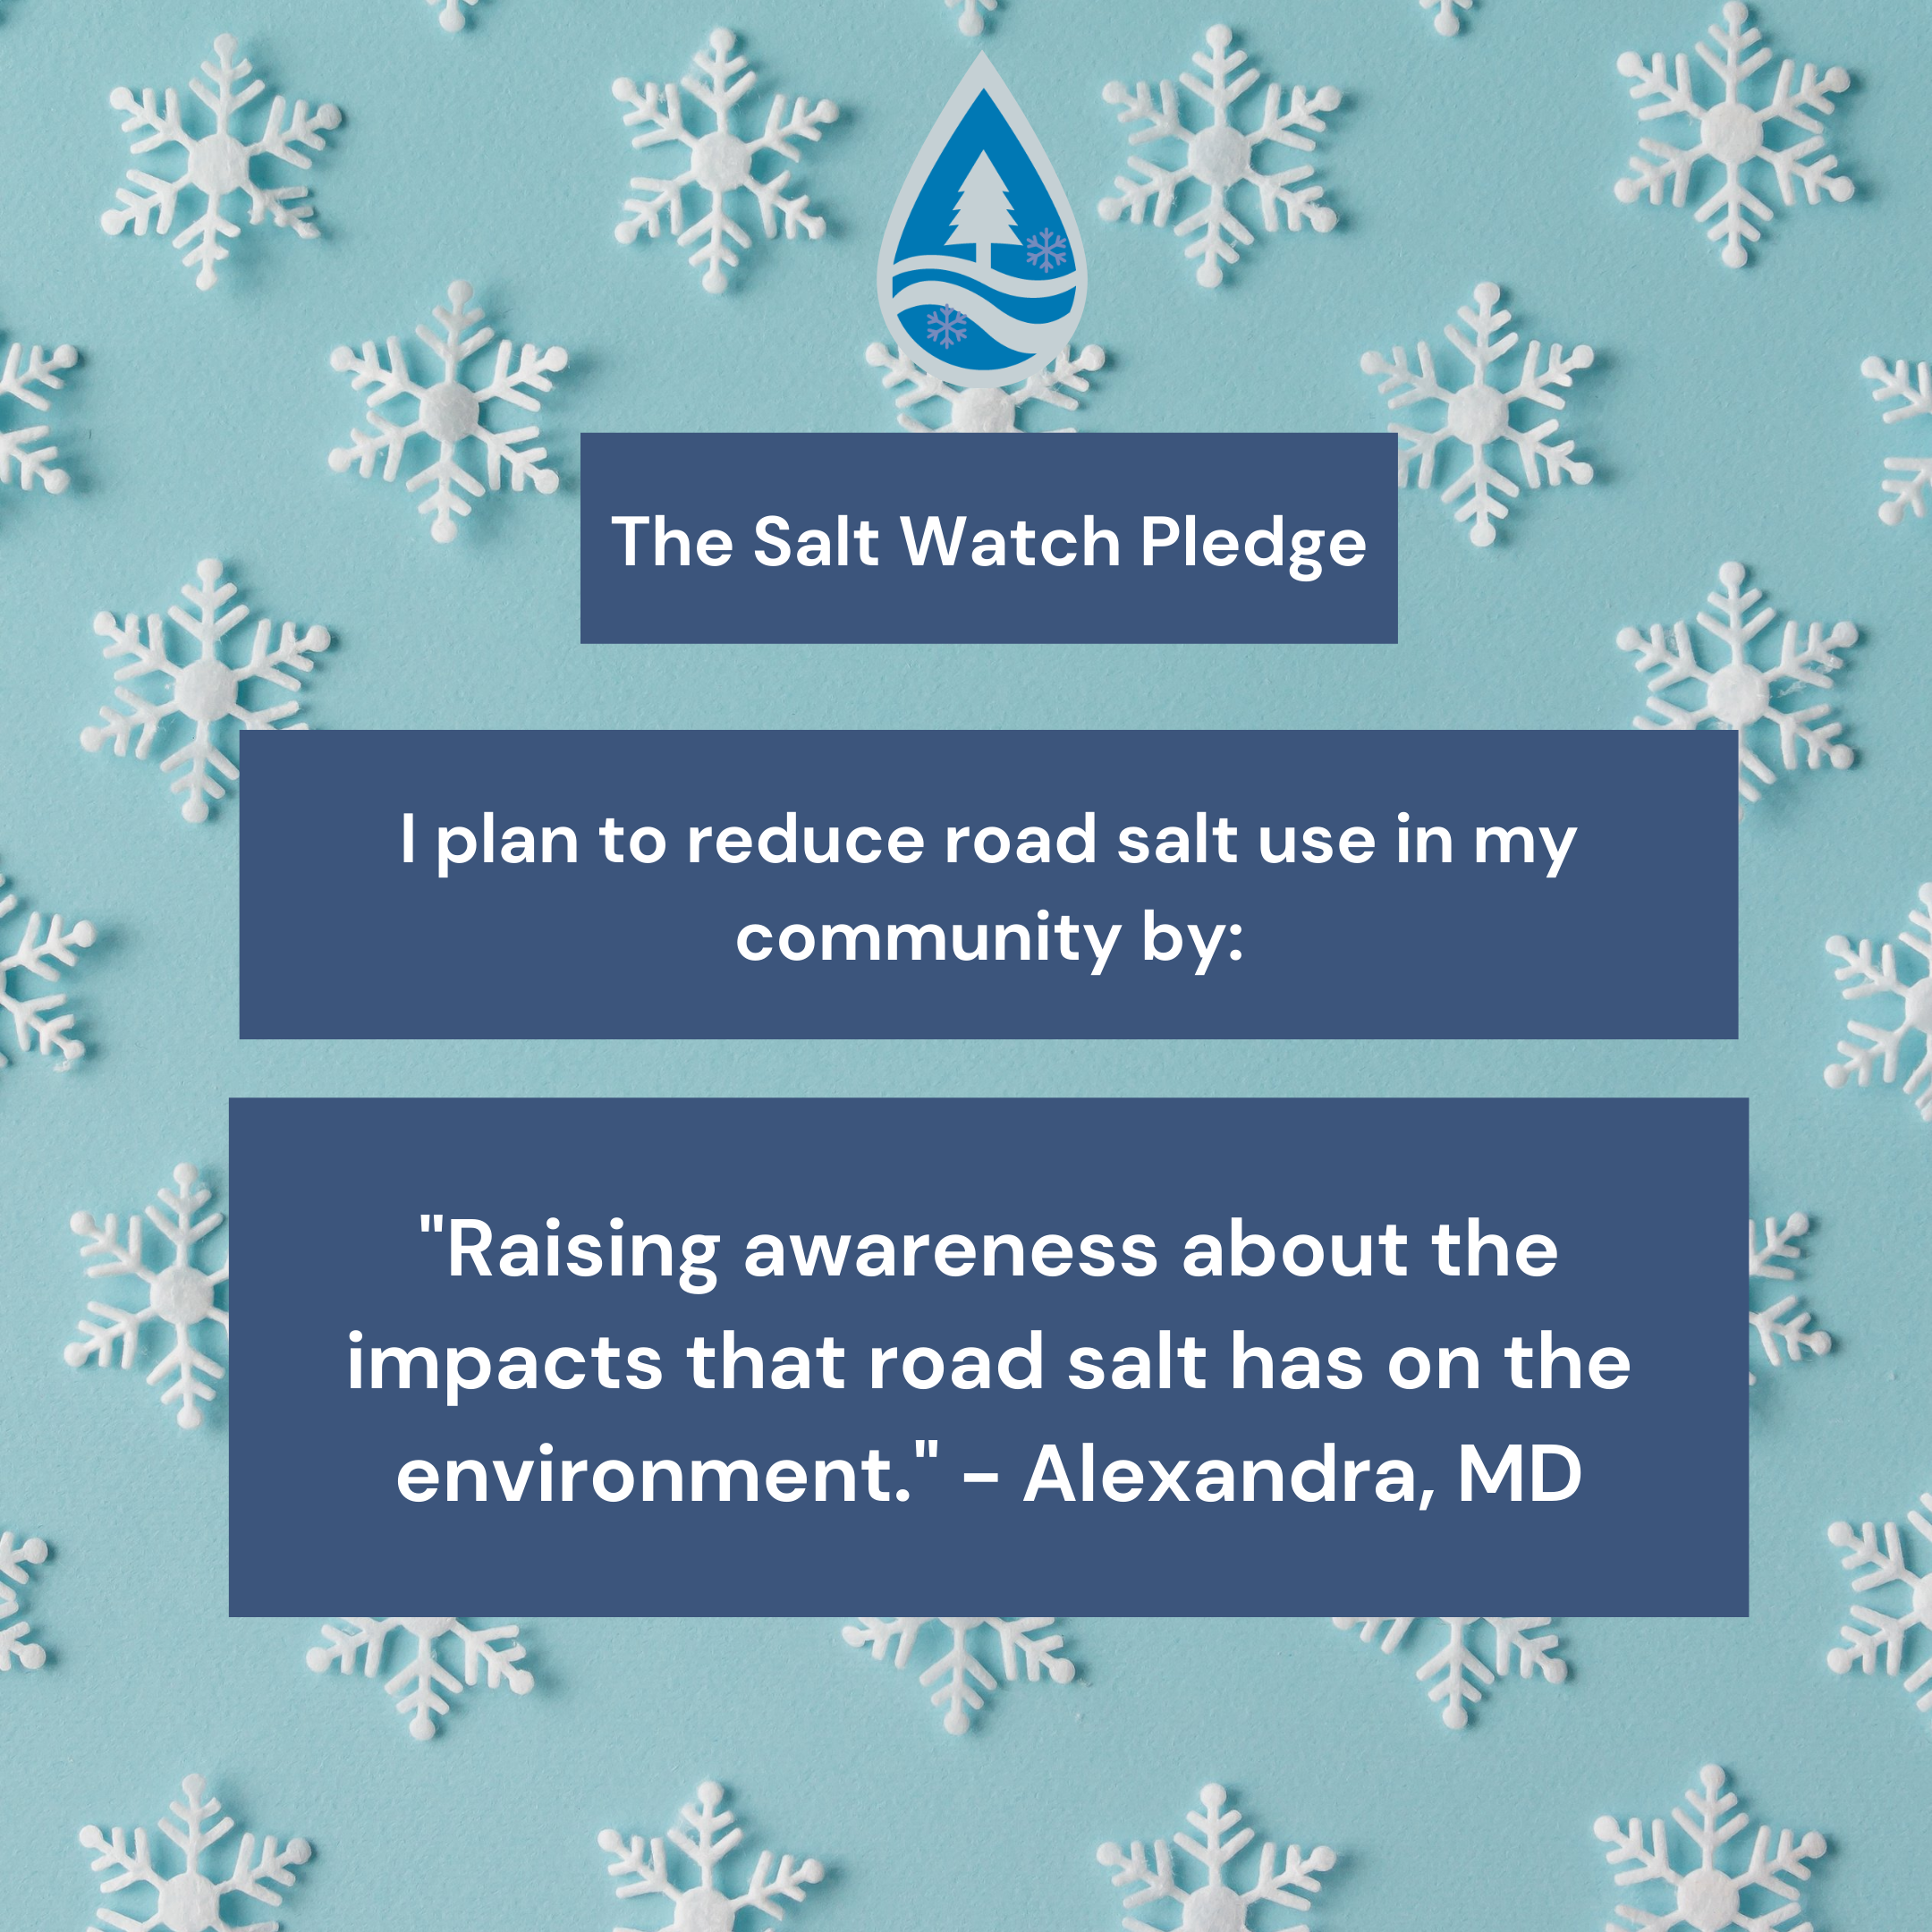 Salt Watch pledge - Alexandra